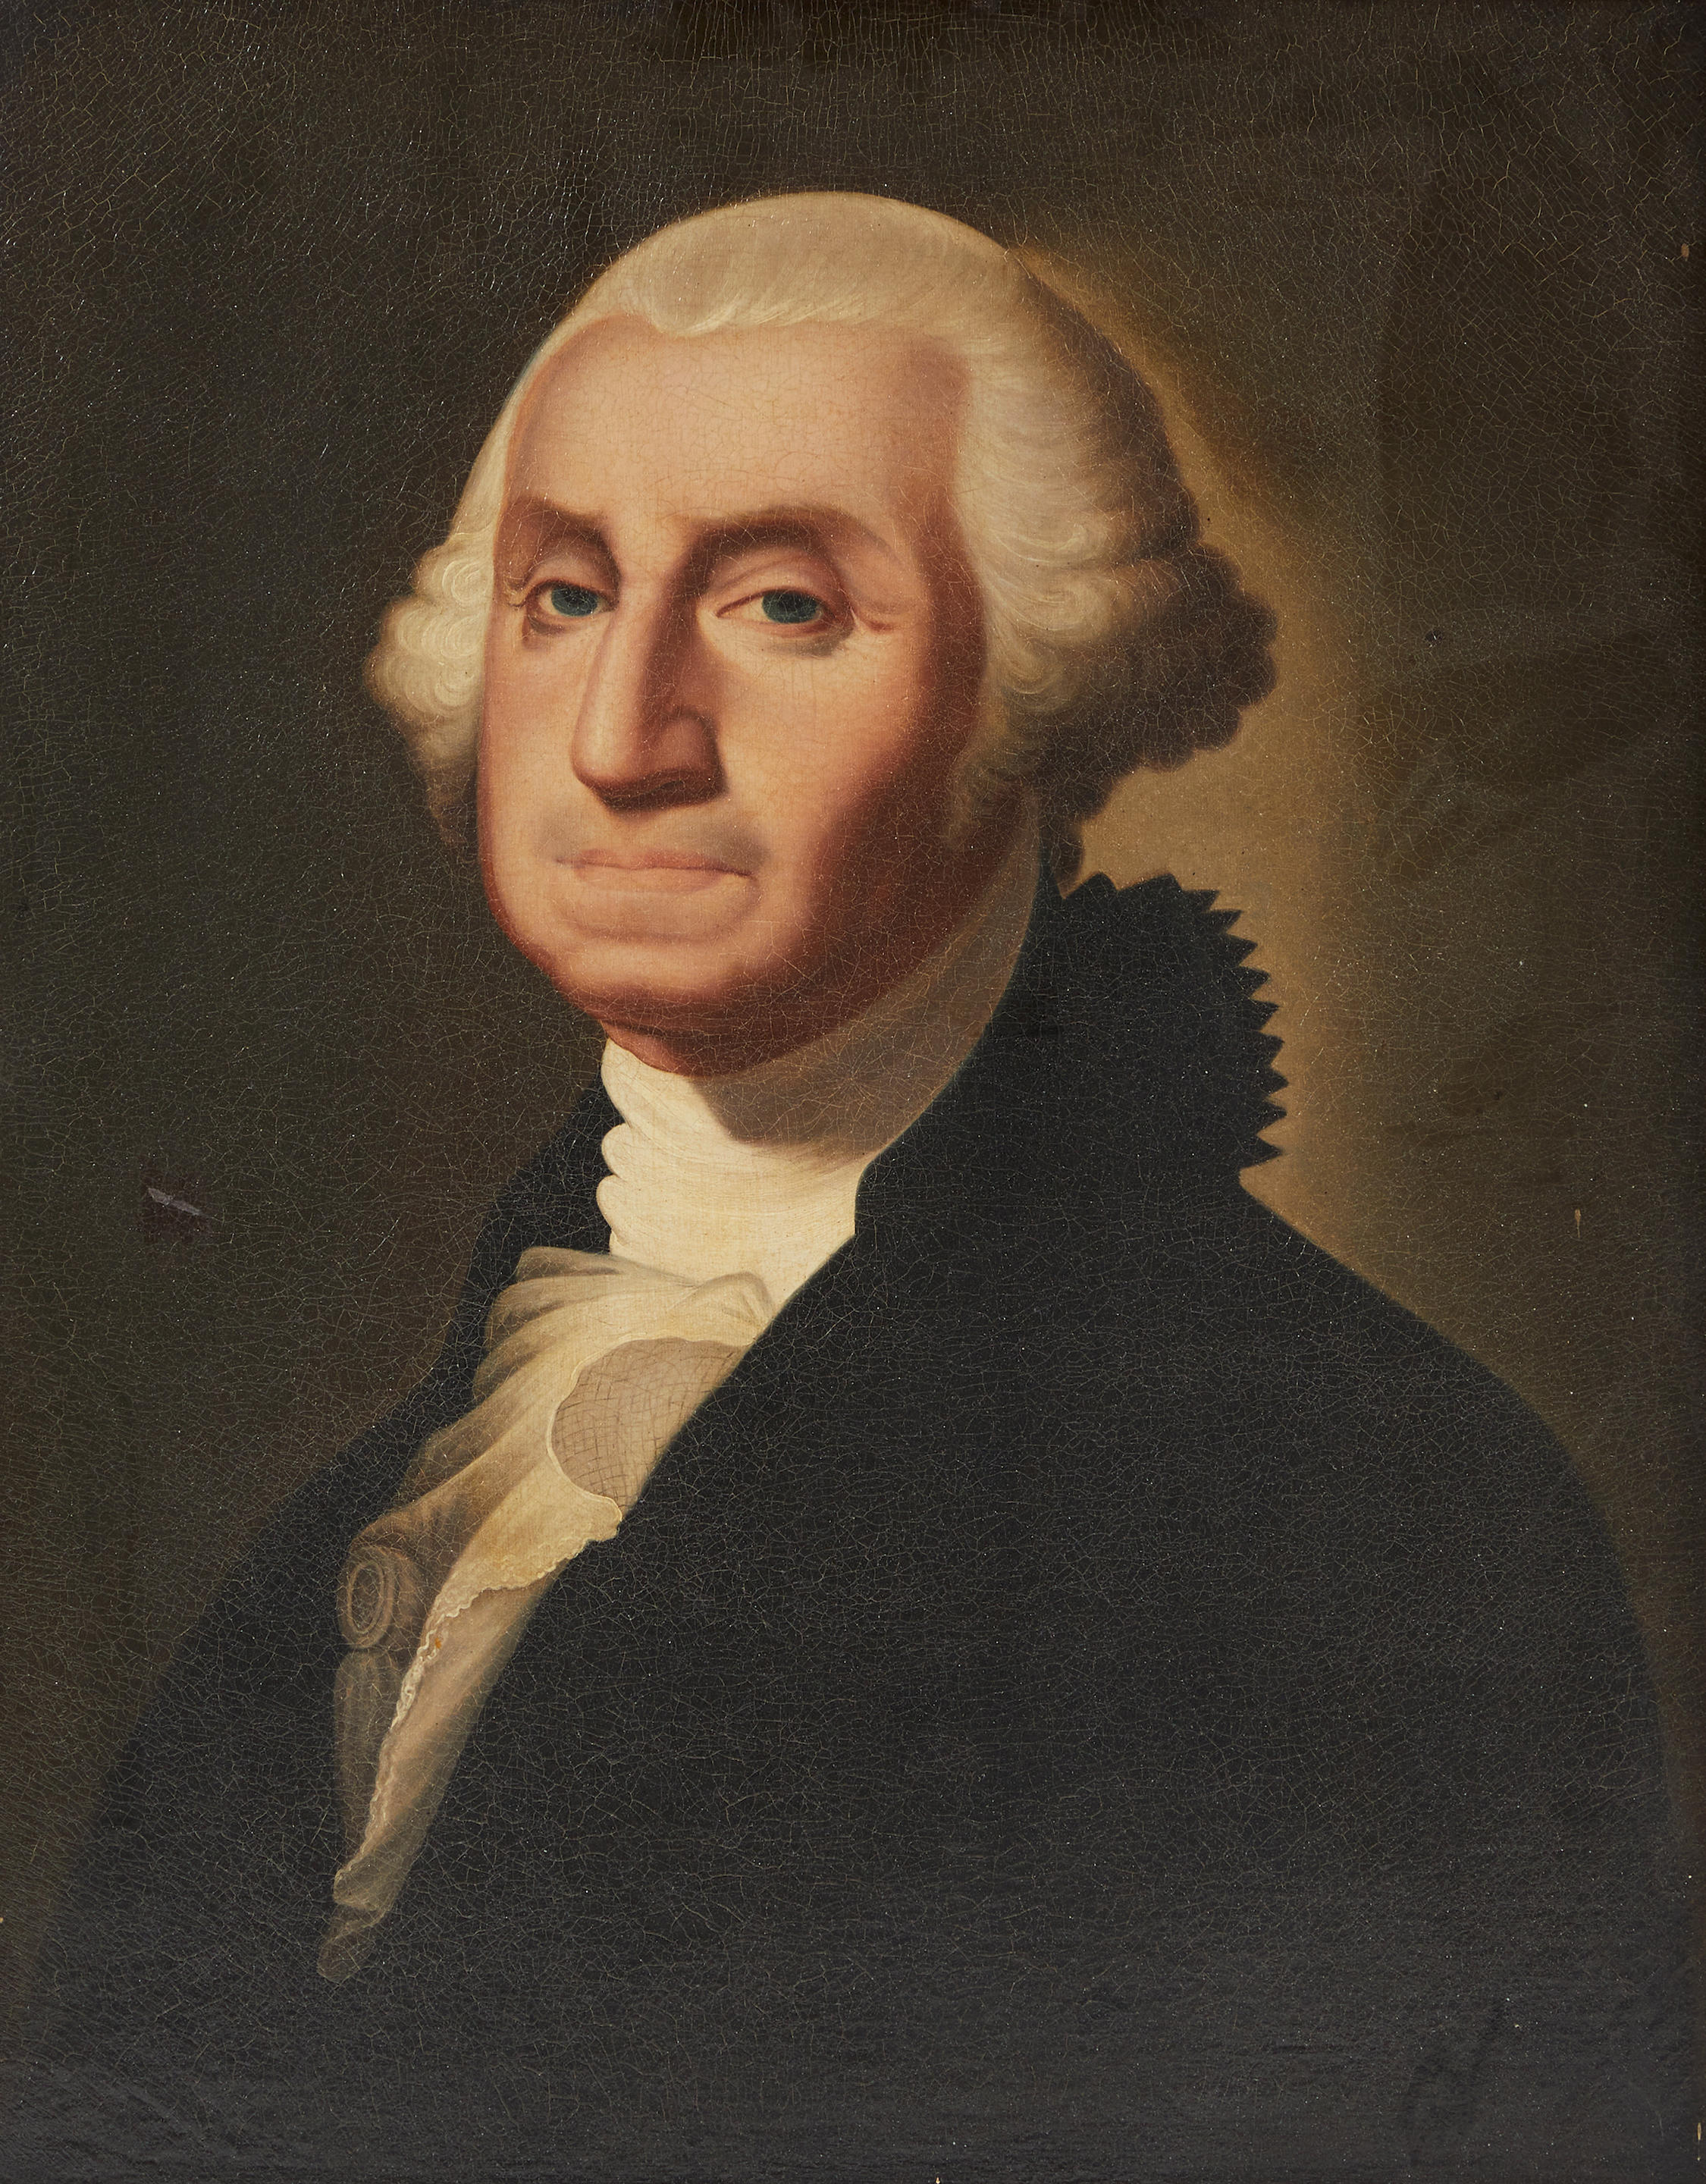 PORTRAIT OF GEORGE WASHINGTON.